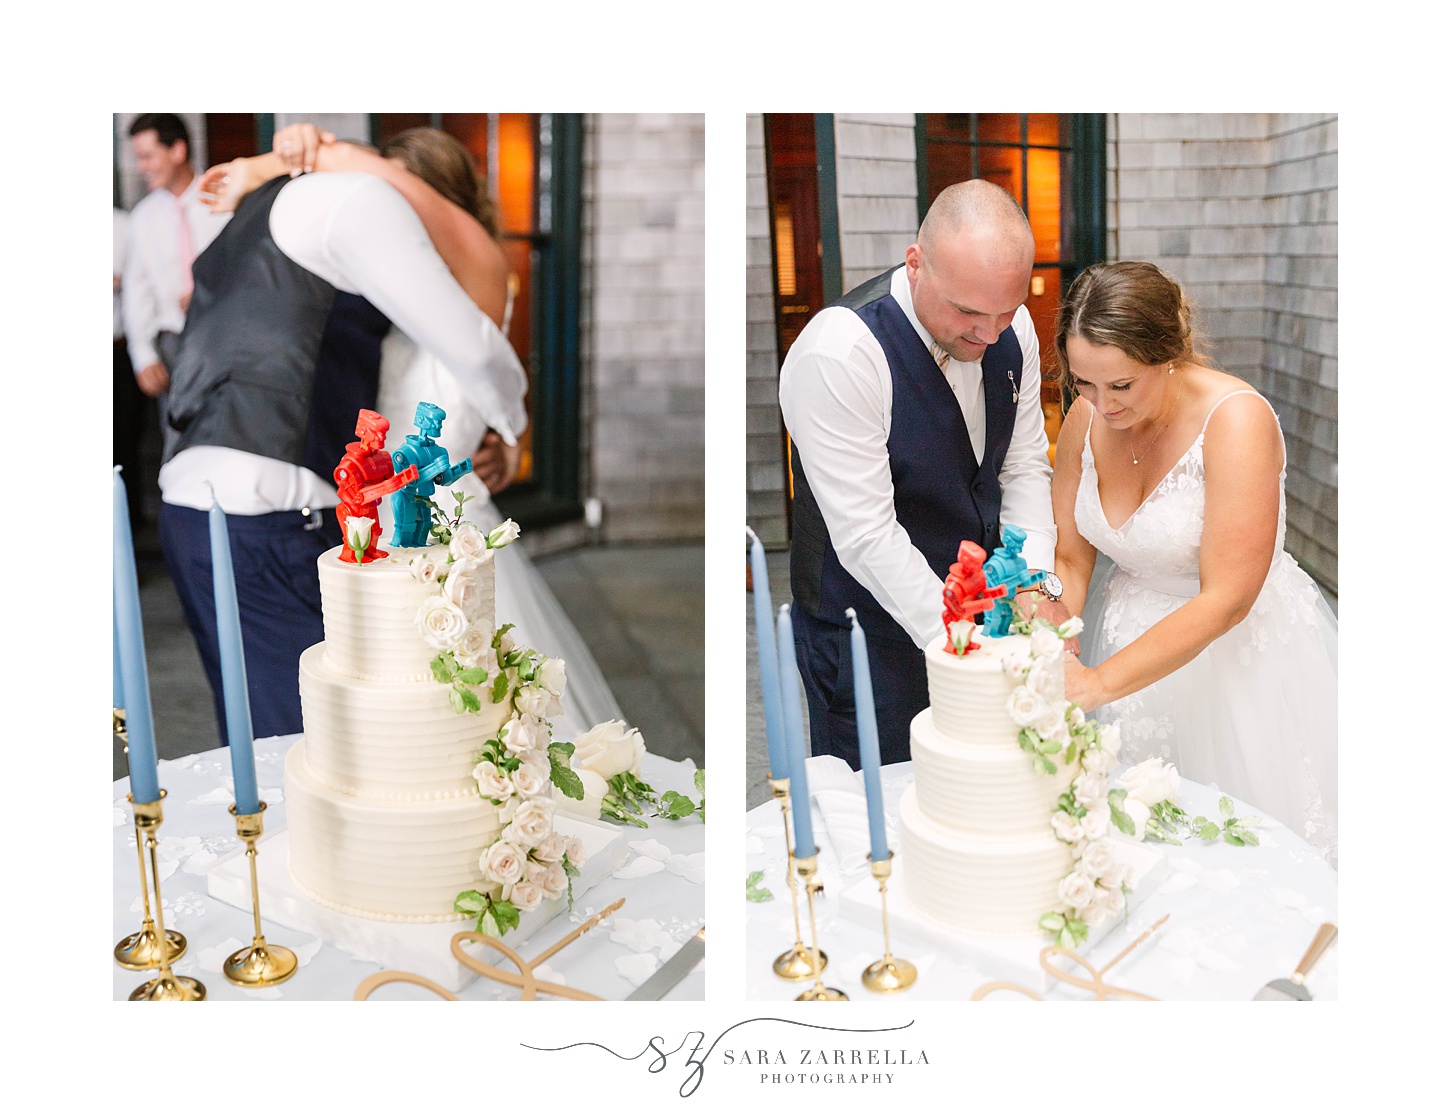 couple cuts wedding cake with rock em sock em on top 